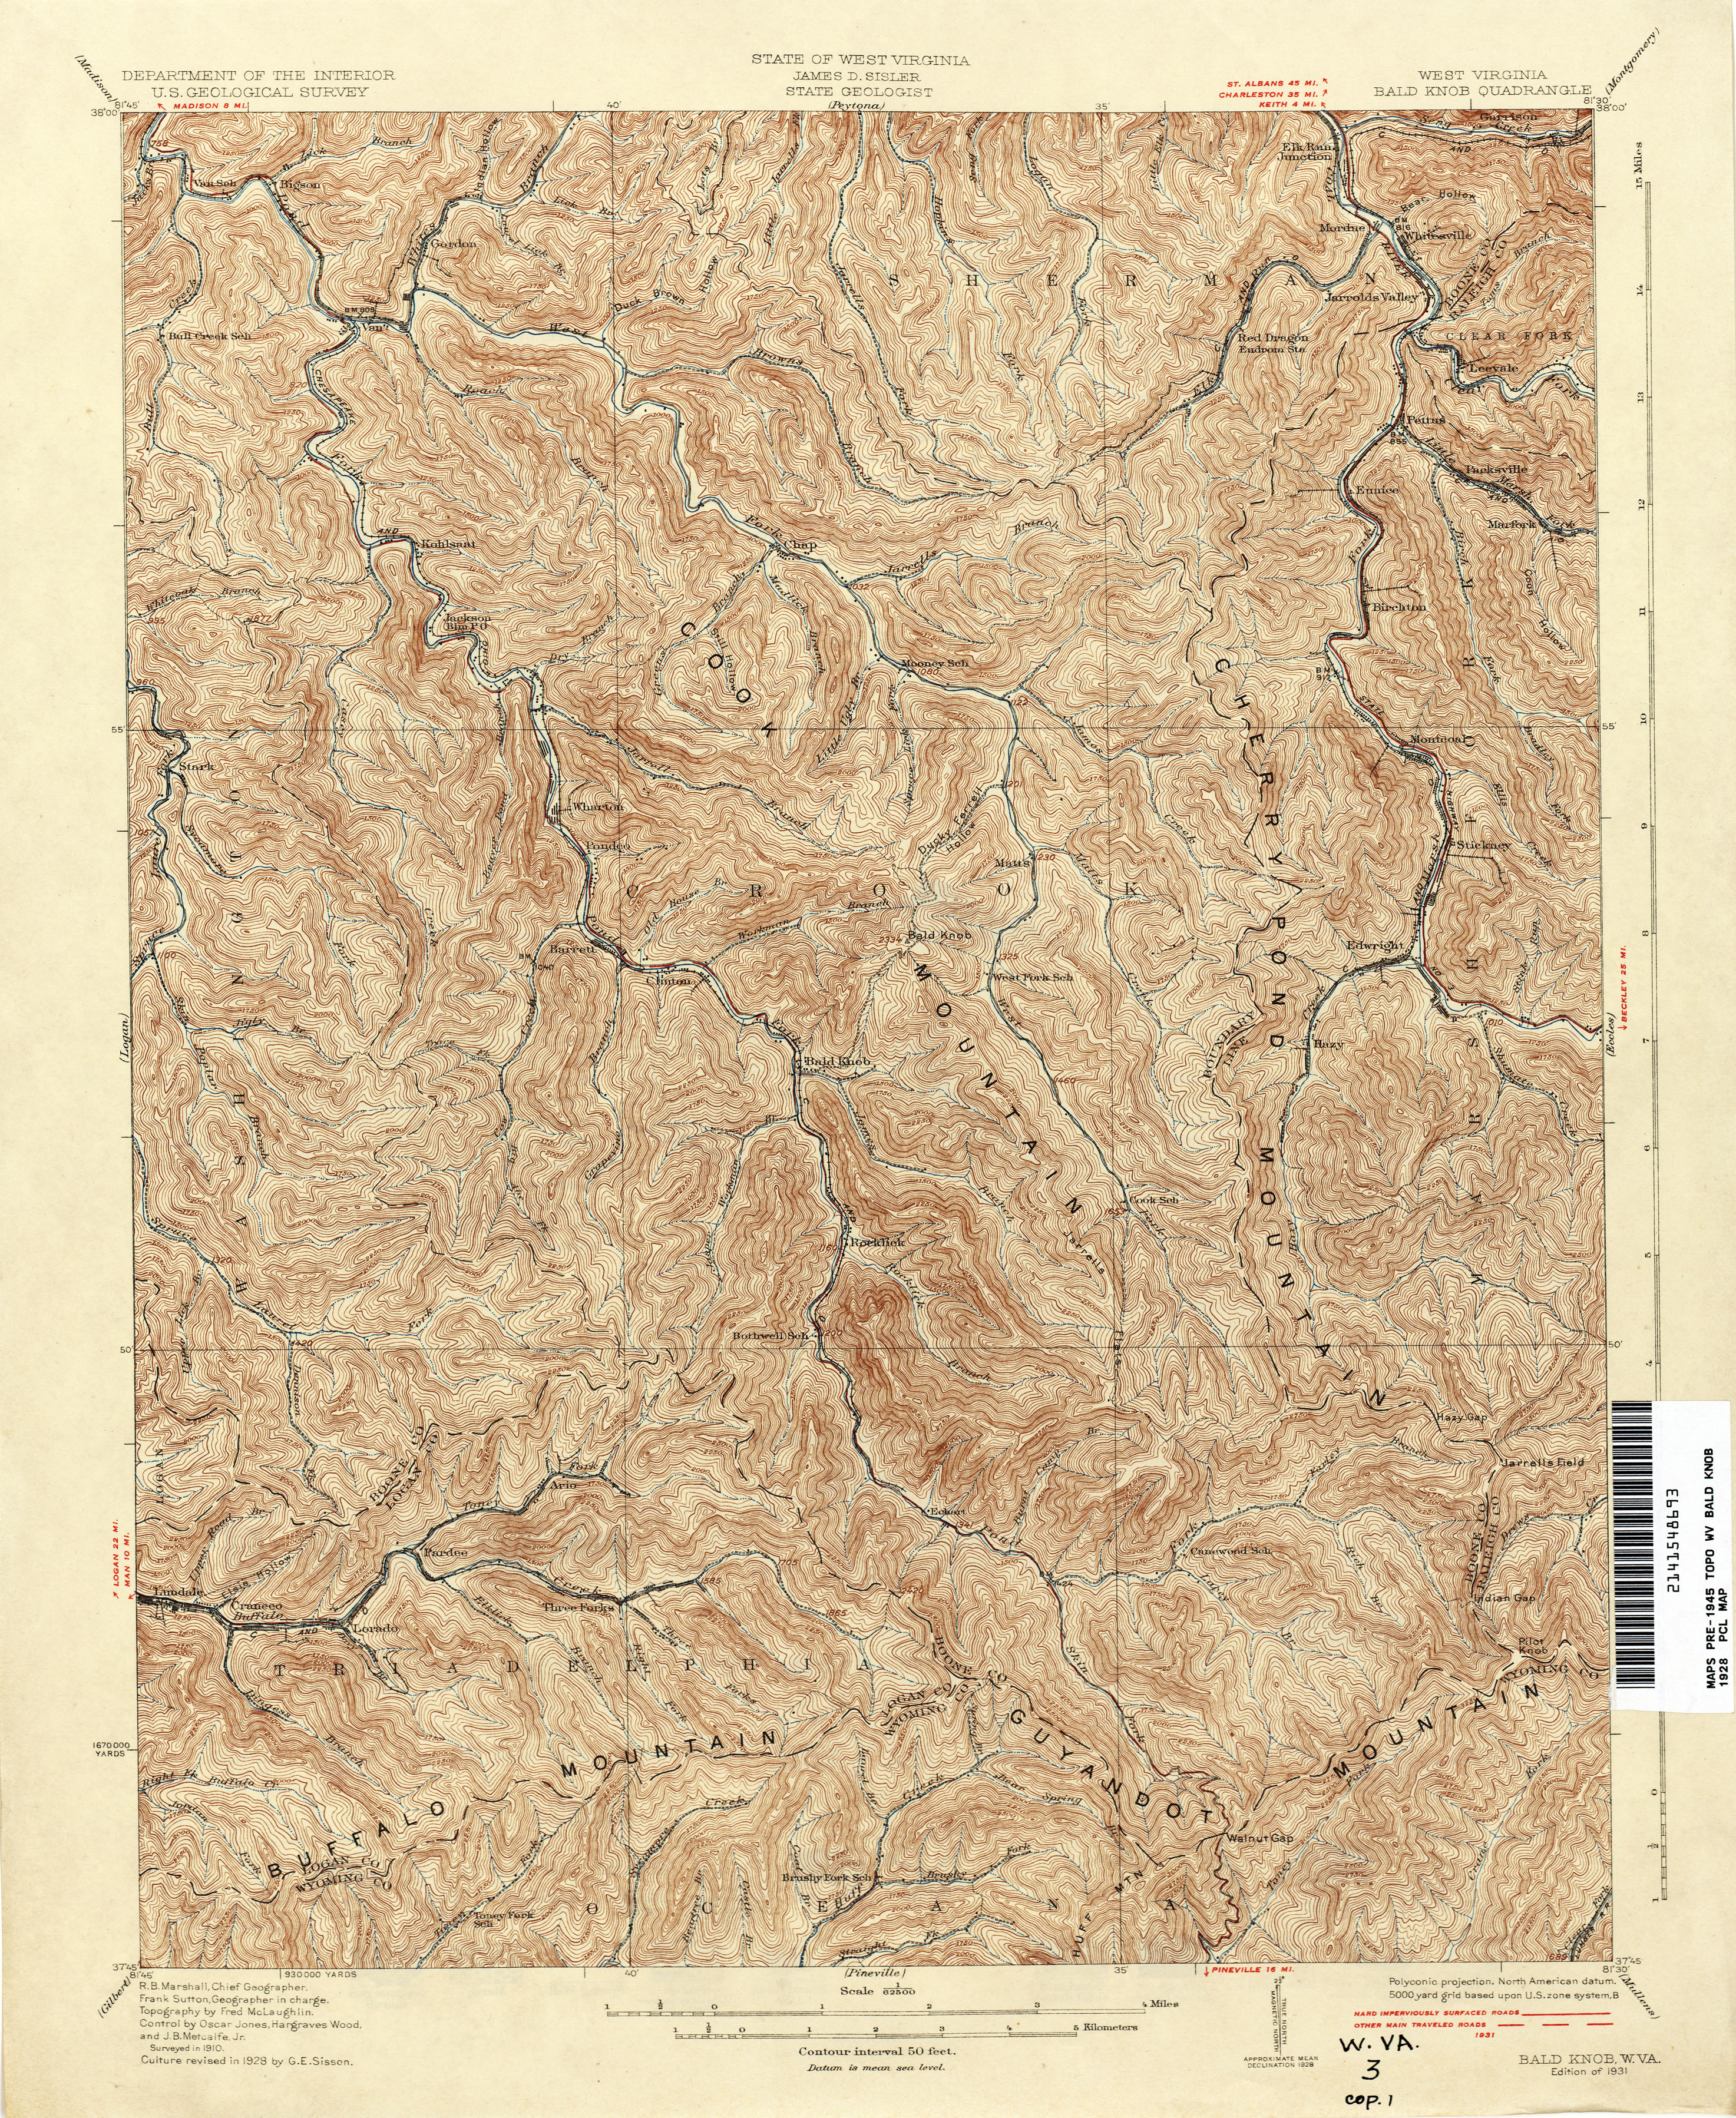 Meade Proctor Pinegrove Antique Littleton West Virginia 1905 US Geological Survey Topographic Map \u2013 Wetzel County Galmish Jacksonburg